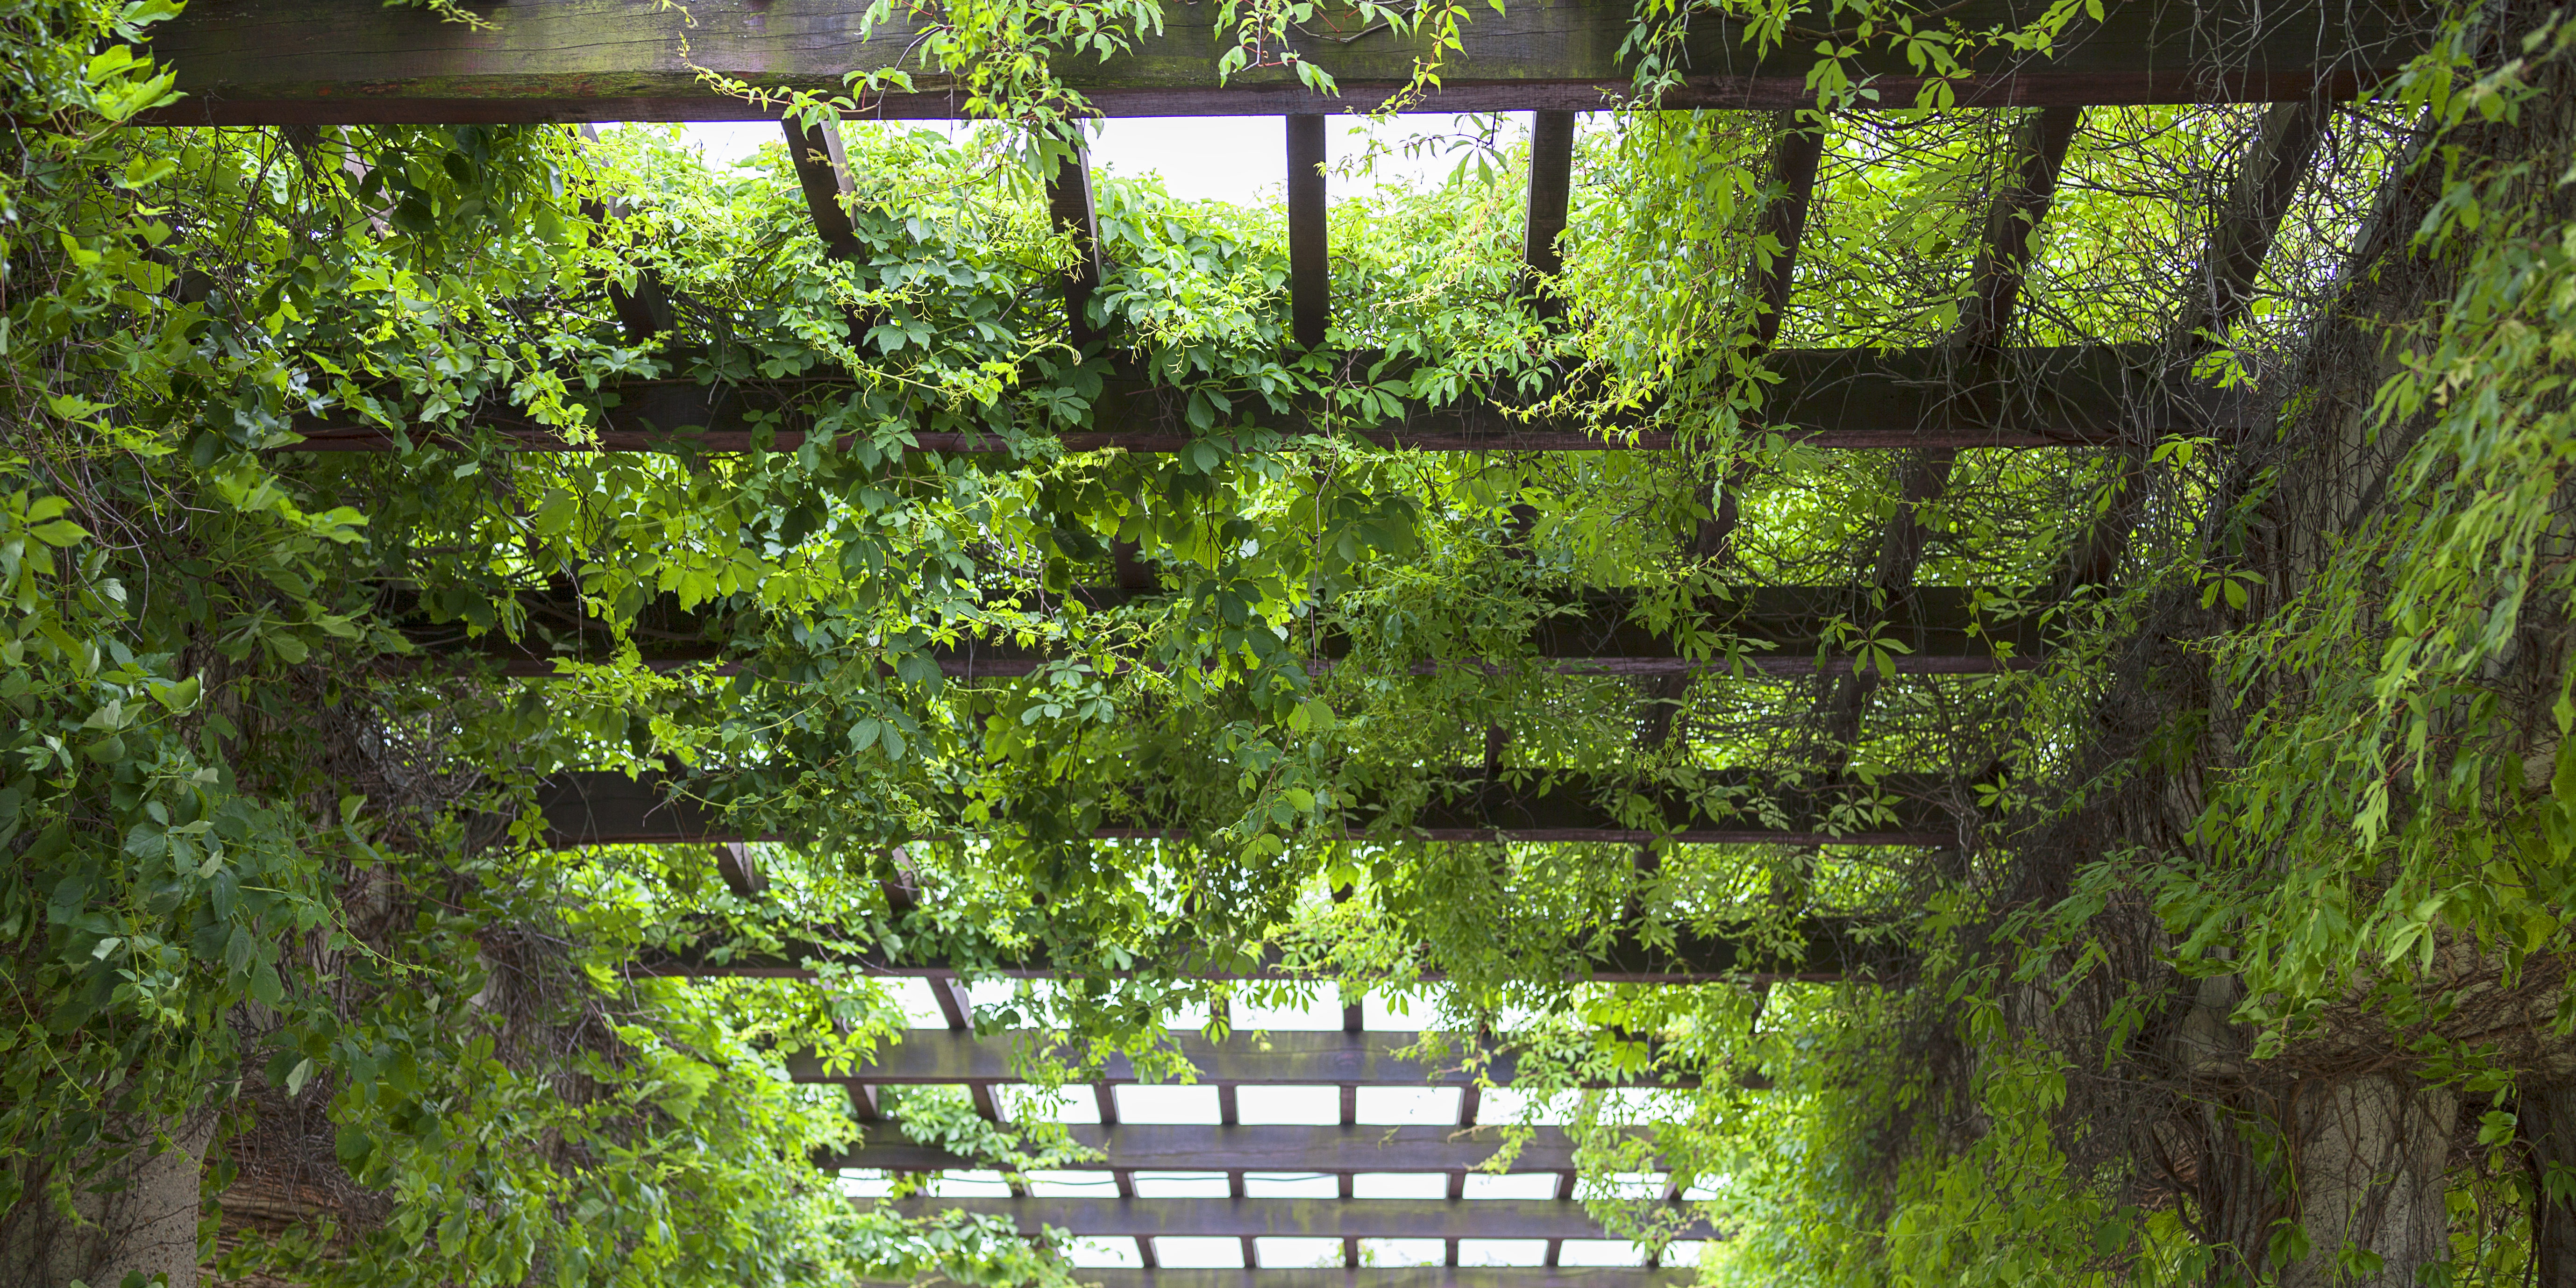 Pergola, Vergola. A timber structure designed to encorage vegetation growthe